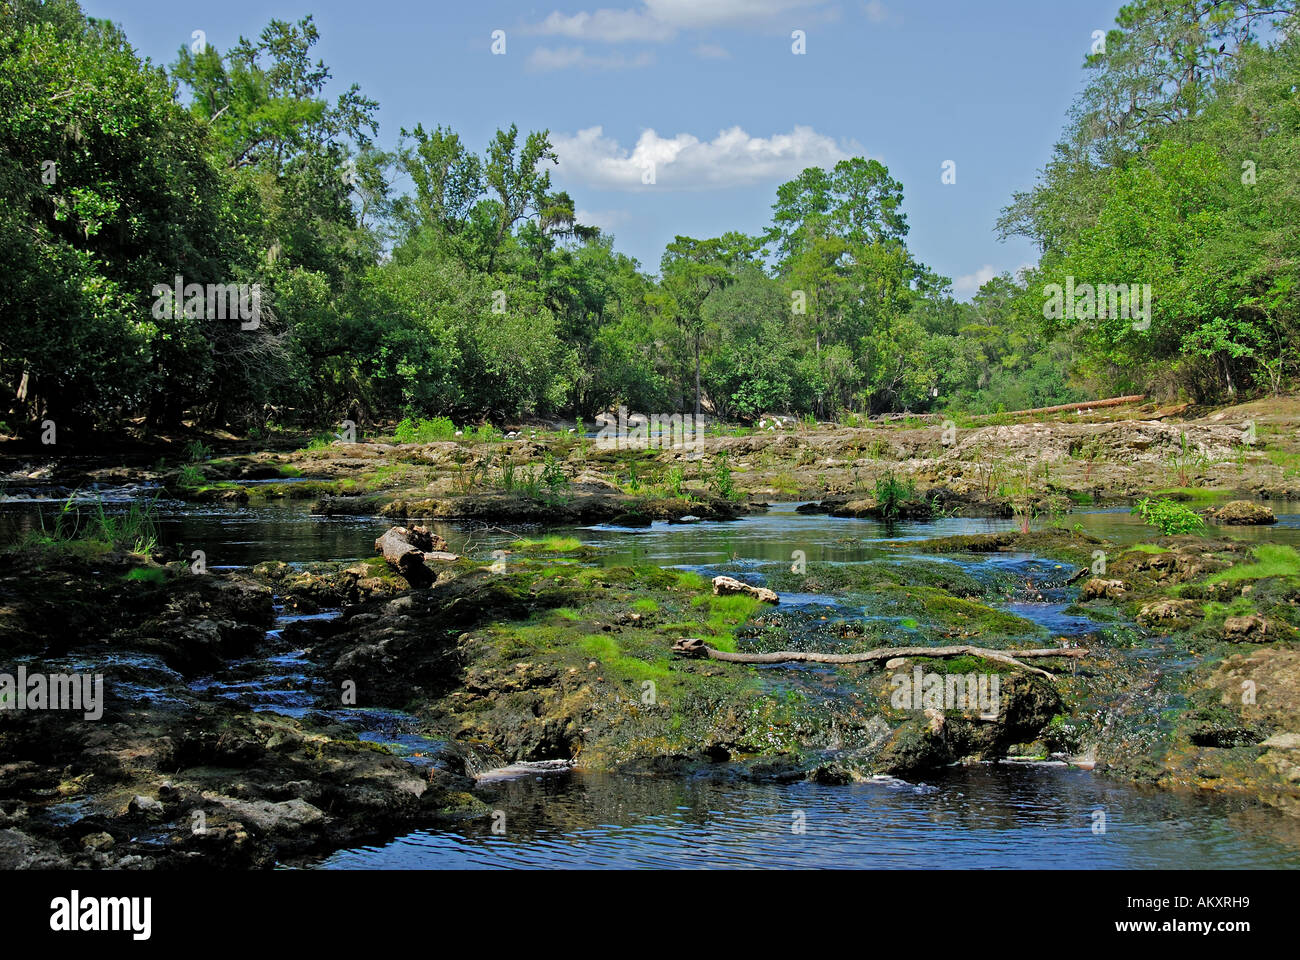 Florida Suwannee River Big Shoals State Park river rapids low water rocks stones Stock Photo